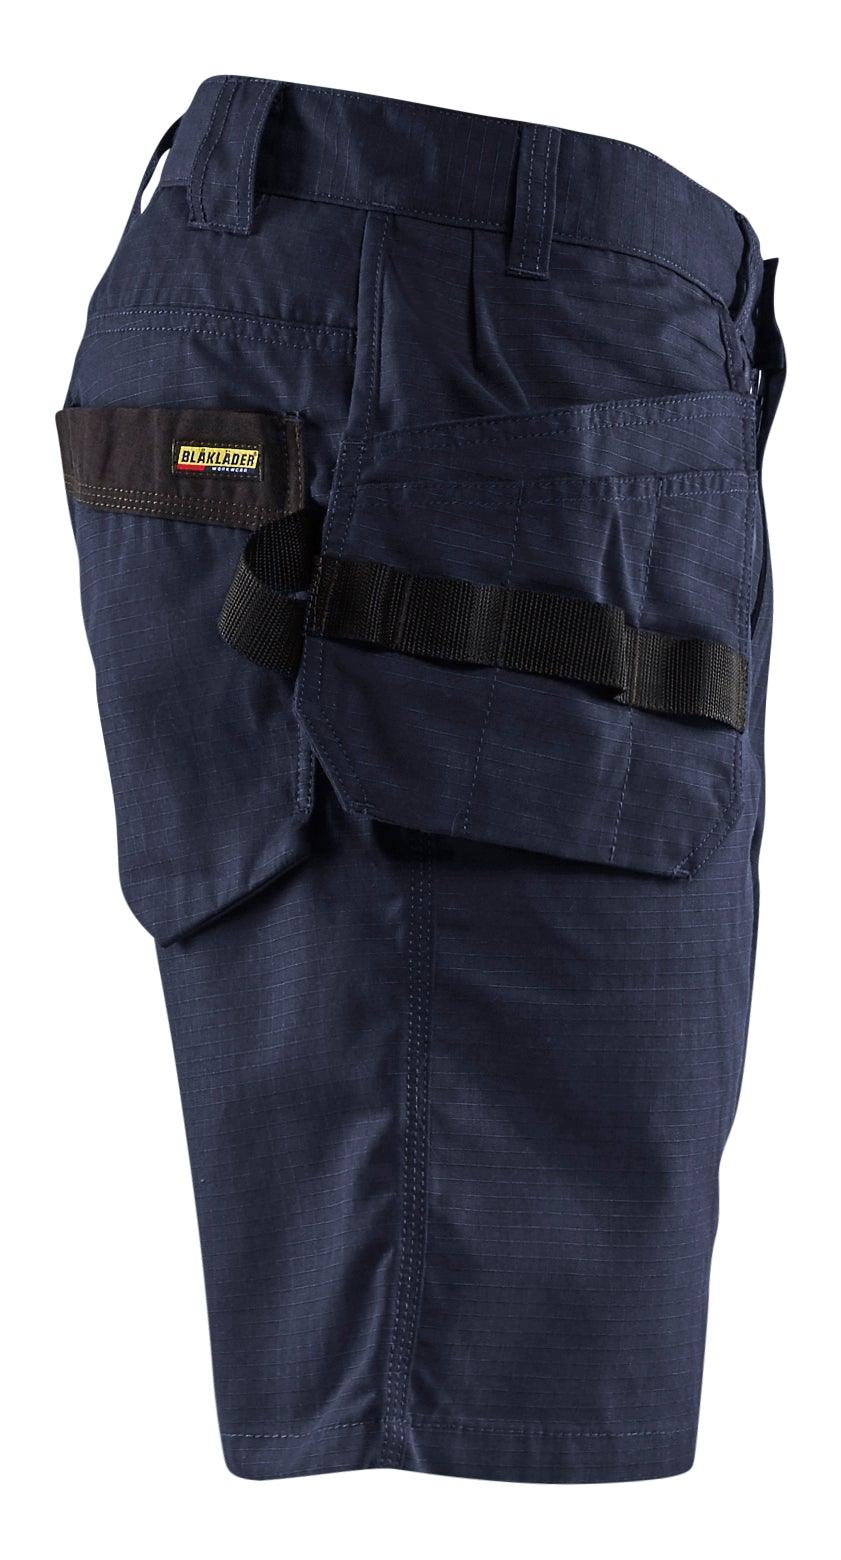 Blaklader 1637 7oz Rip Stop Shorts with Utility Pockets - Dark Navy - Trusted Gear Company LLC